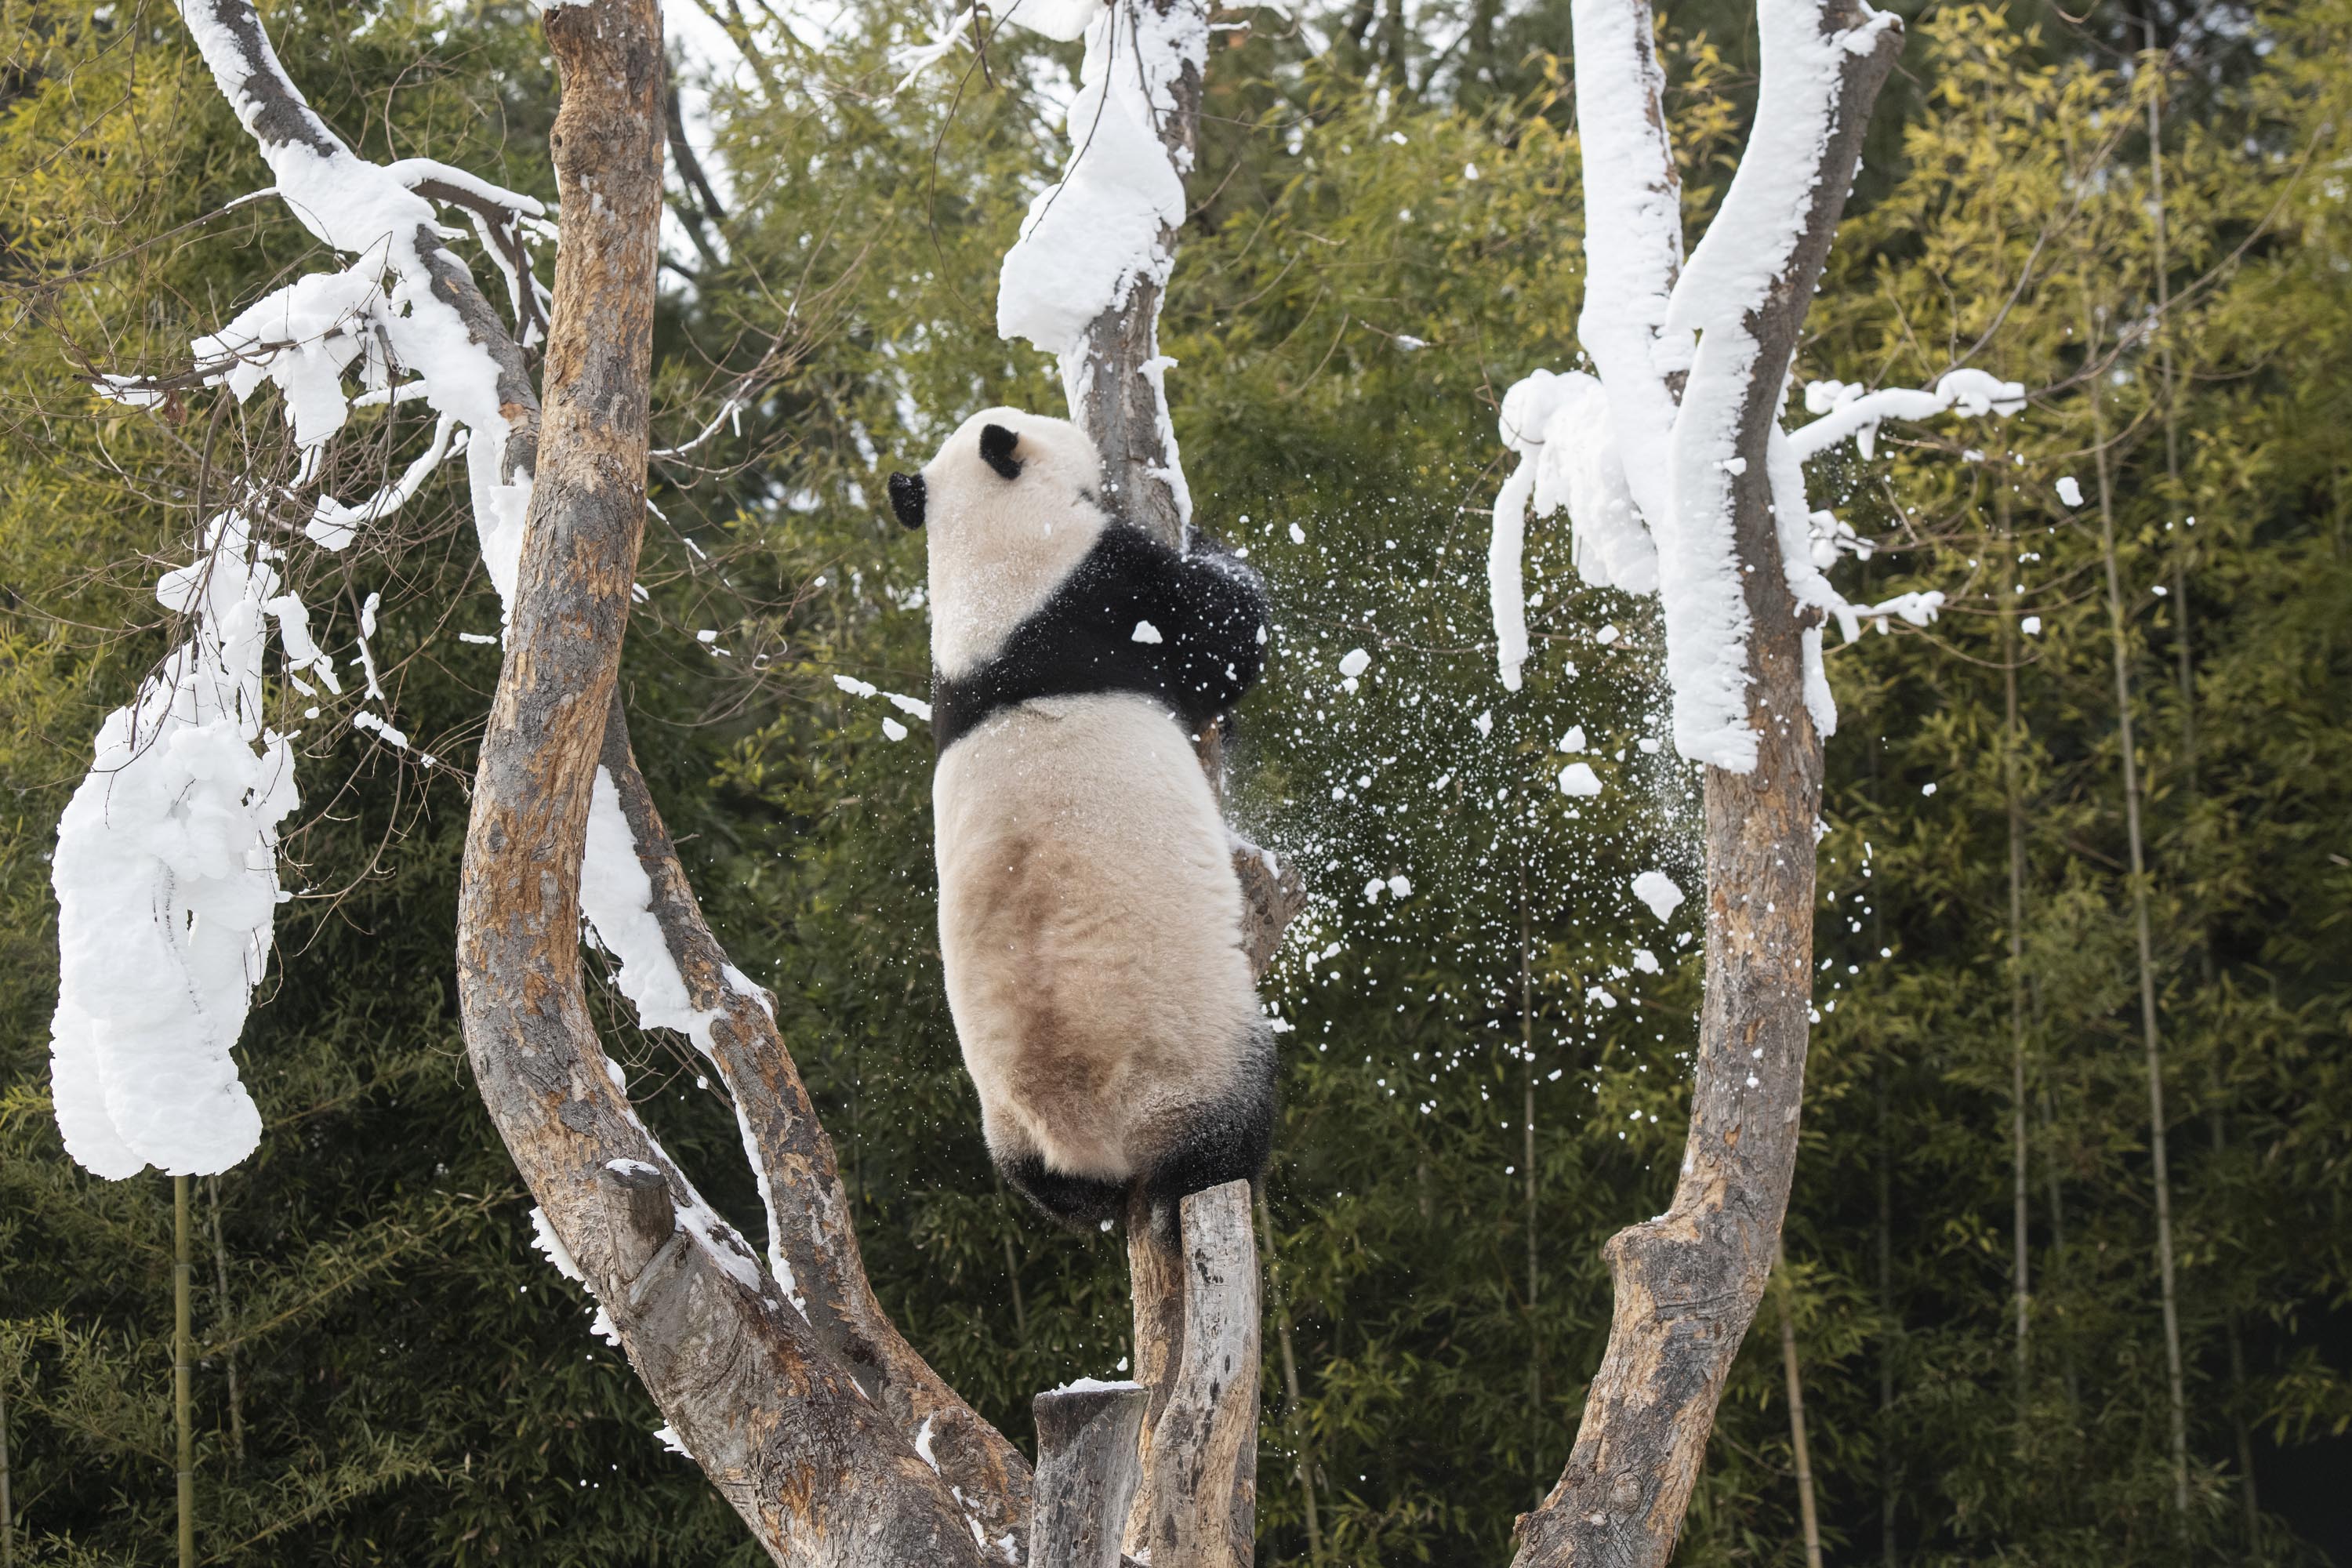 Danes in queue to see pandas in Beijing's popular 'panda diplomacy'